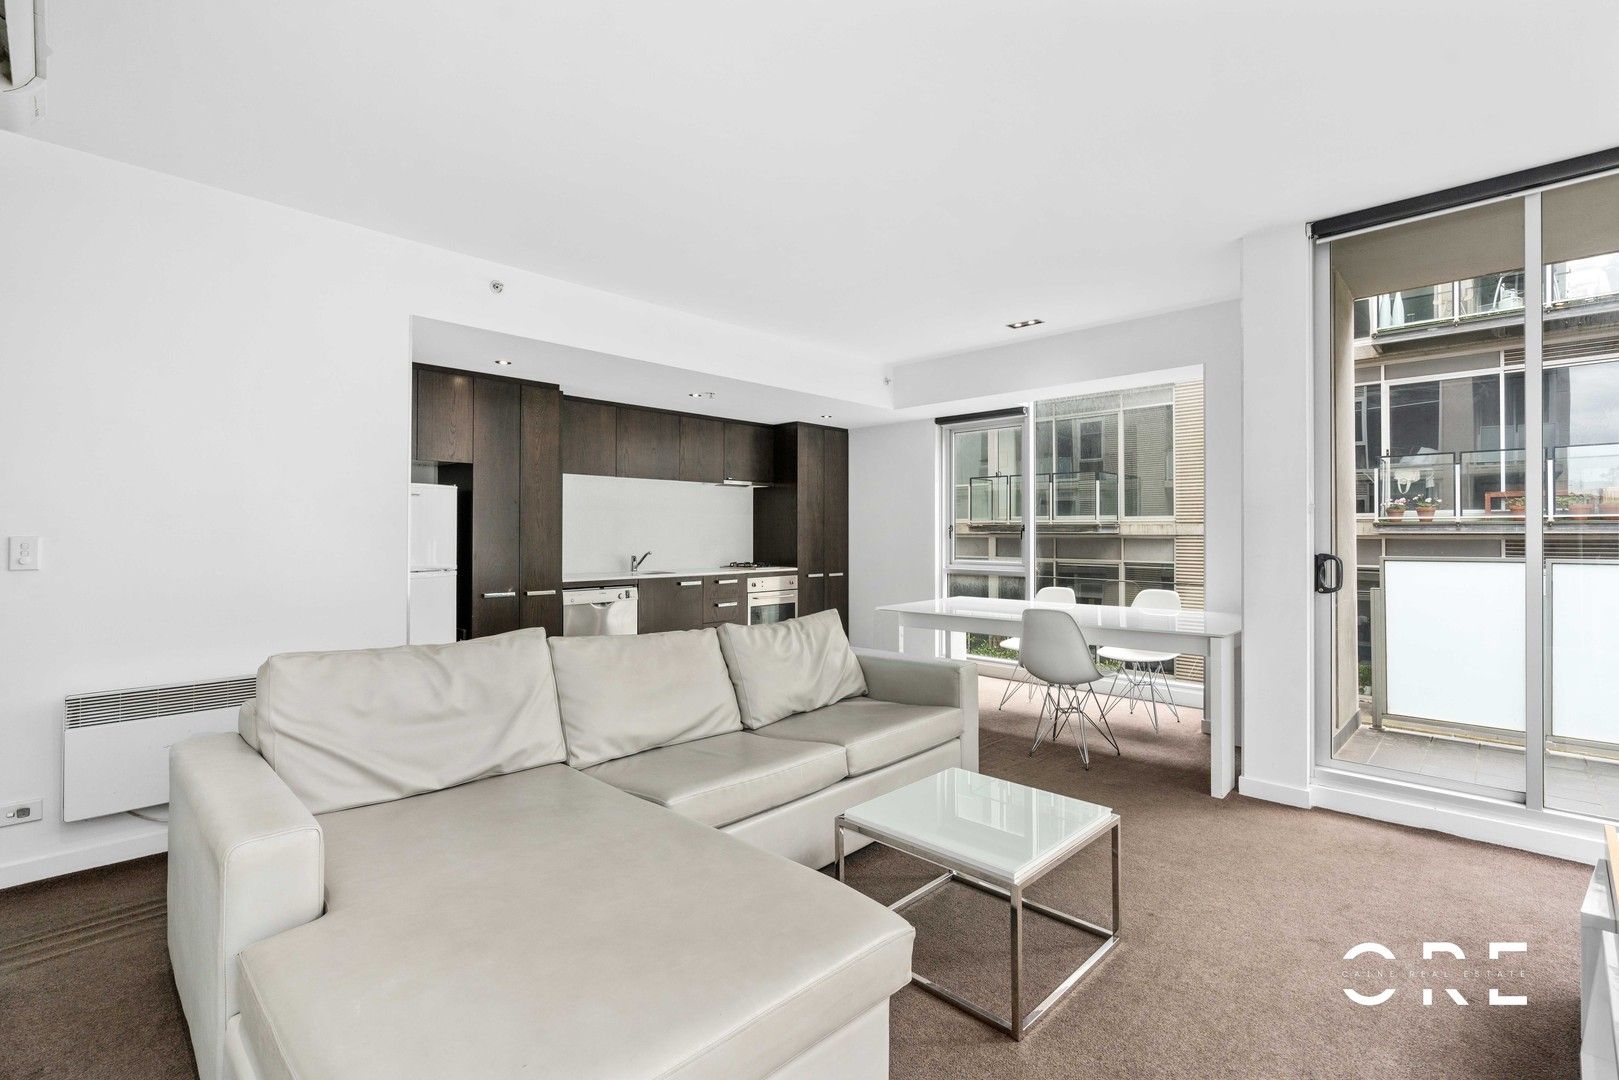 2 bedrooms House in 214v/162 Albert Street EAST MELBOURNE VIC, 3002